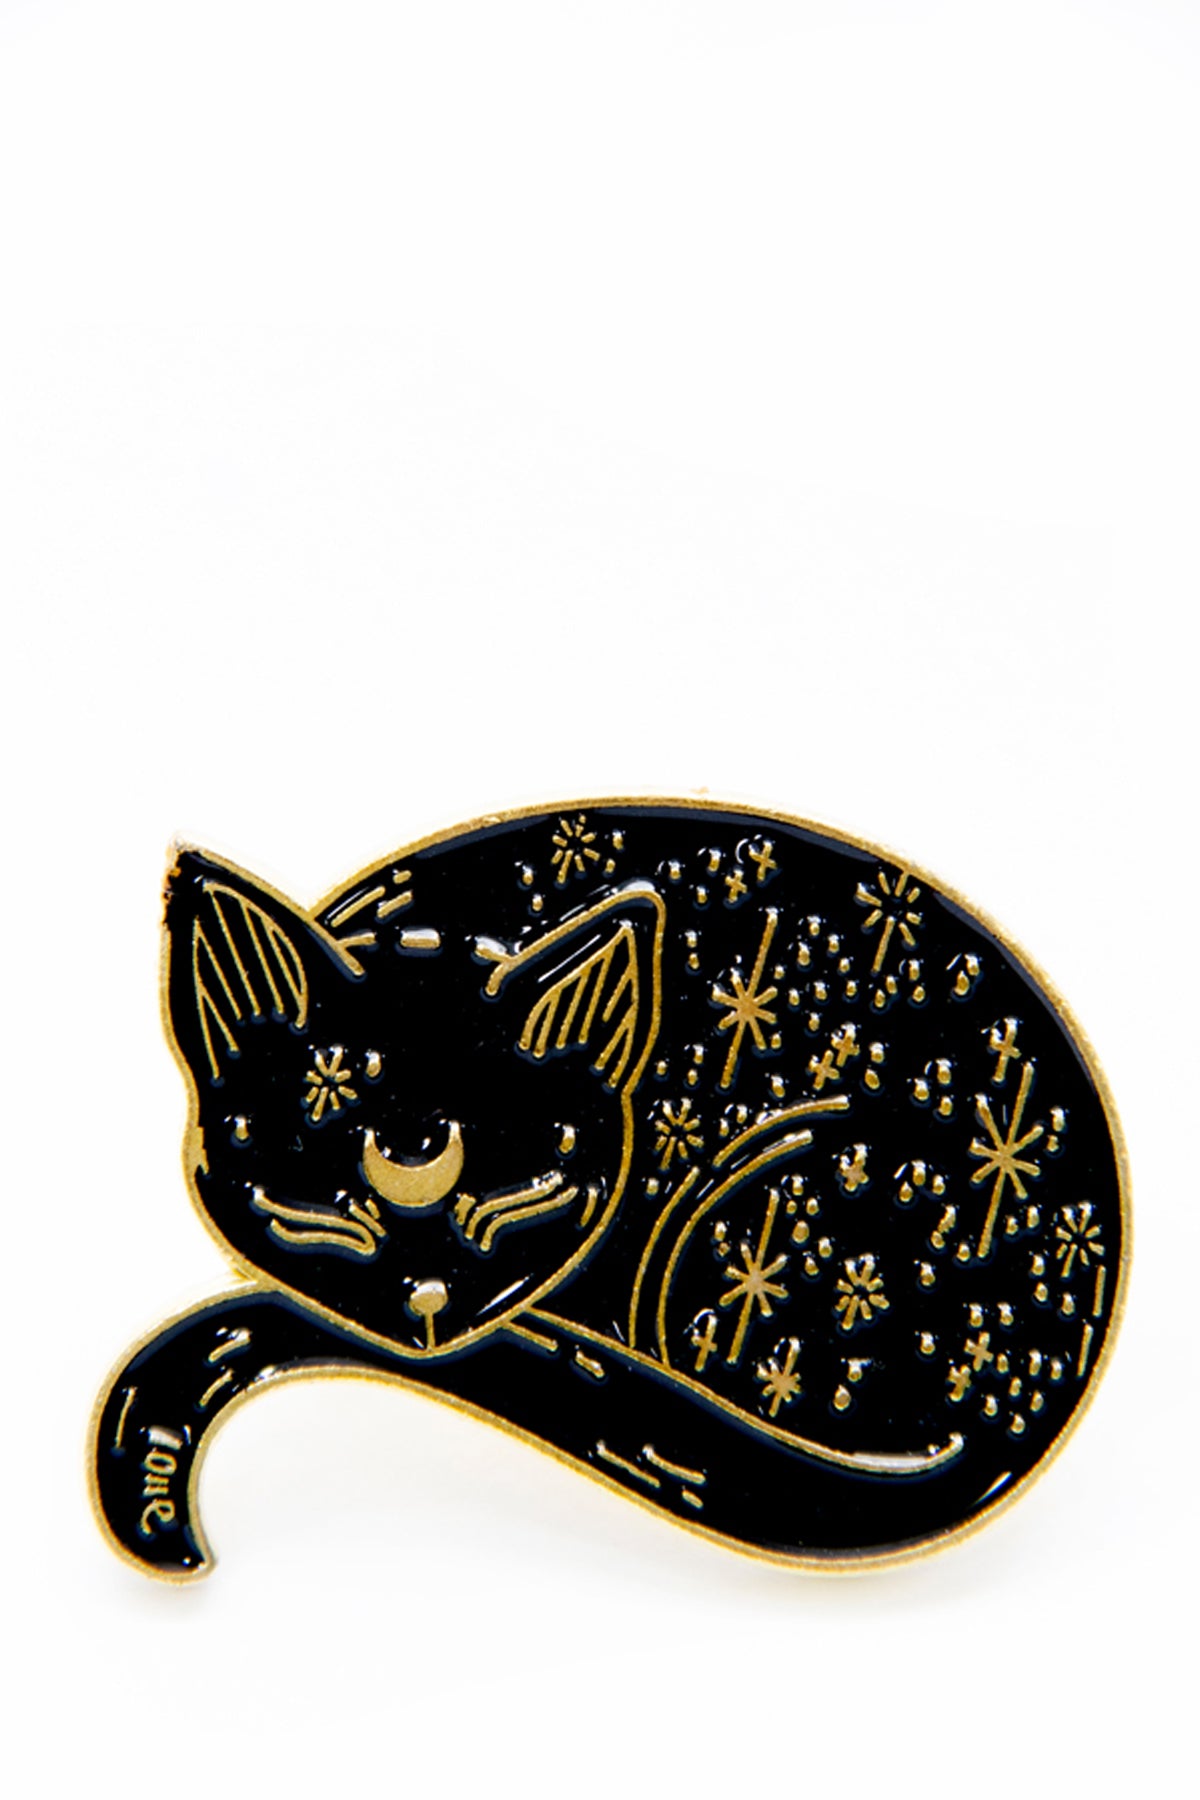 Witch Cat- Sleeping black cat enamel pin - shopjessicalouise.com